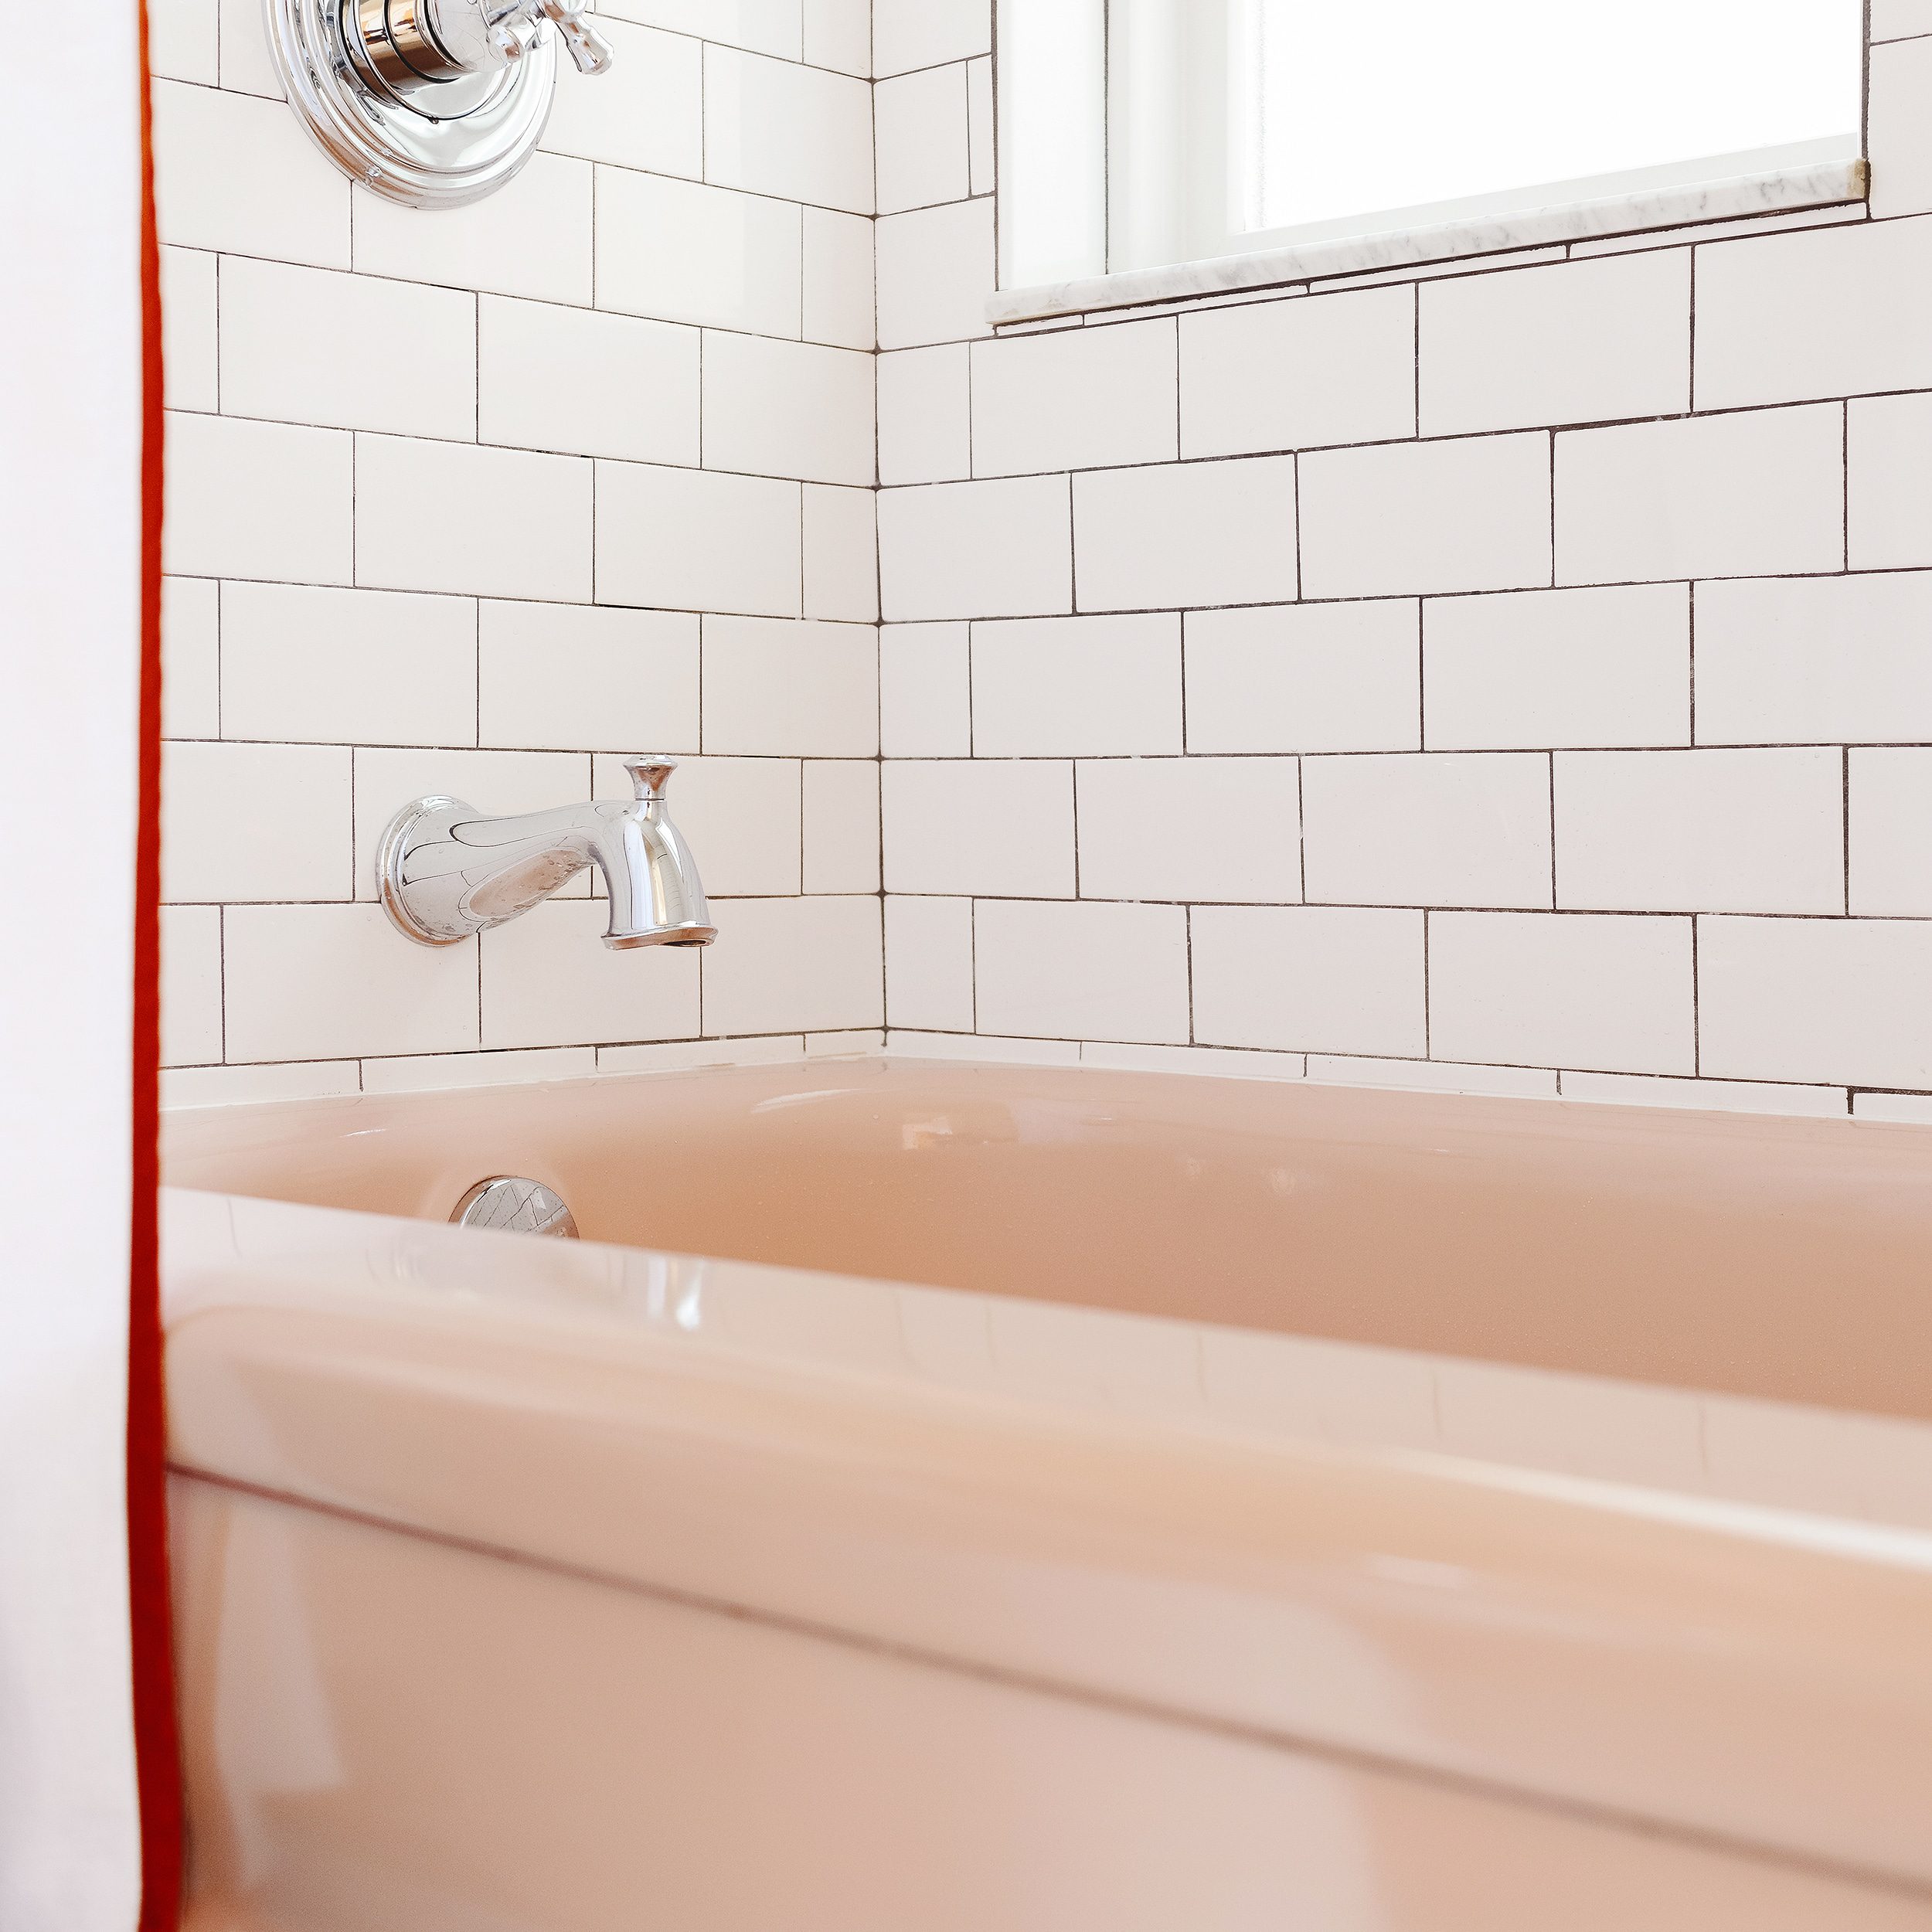 Can You Reglaze A Pink Bathtub, Reglazing Bathtub And Tile Cost